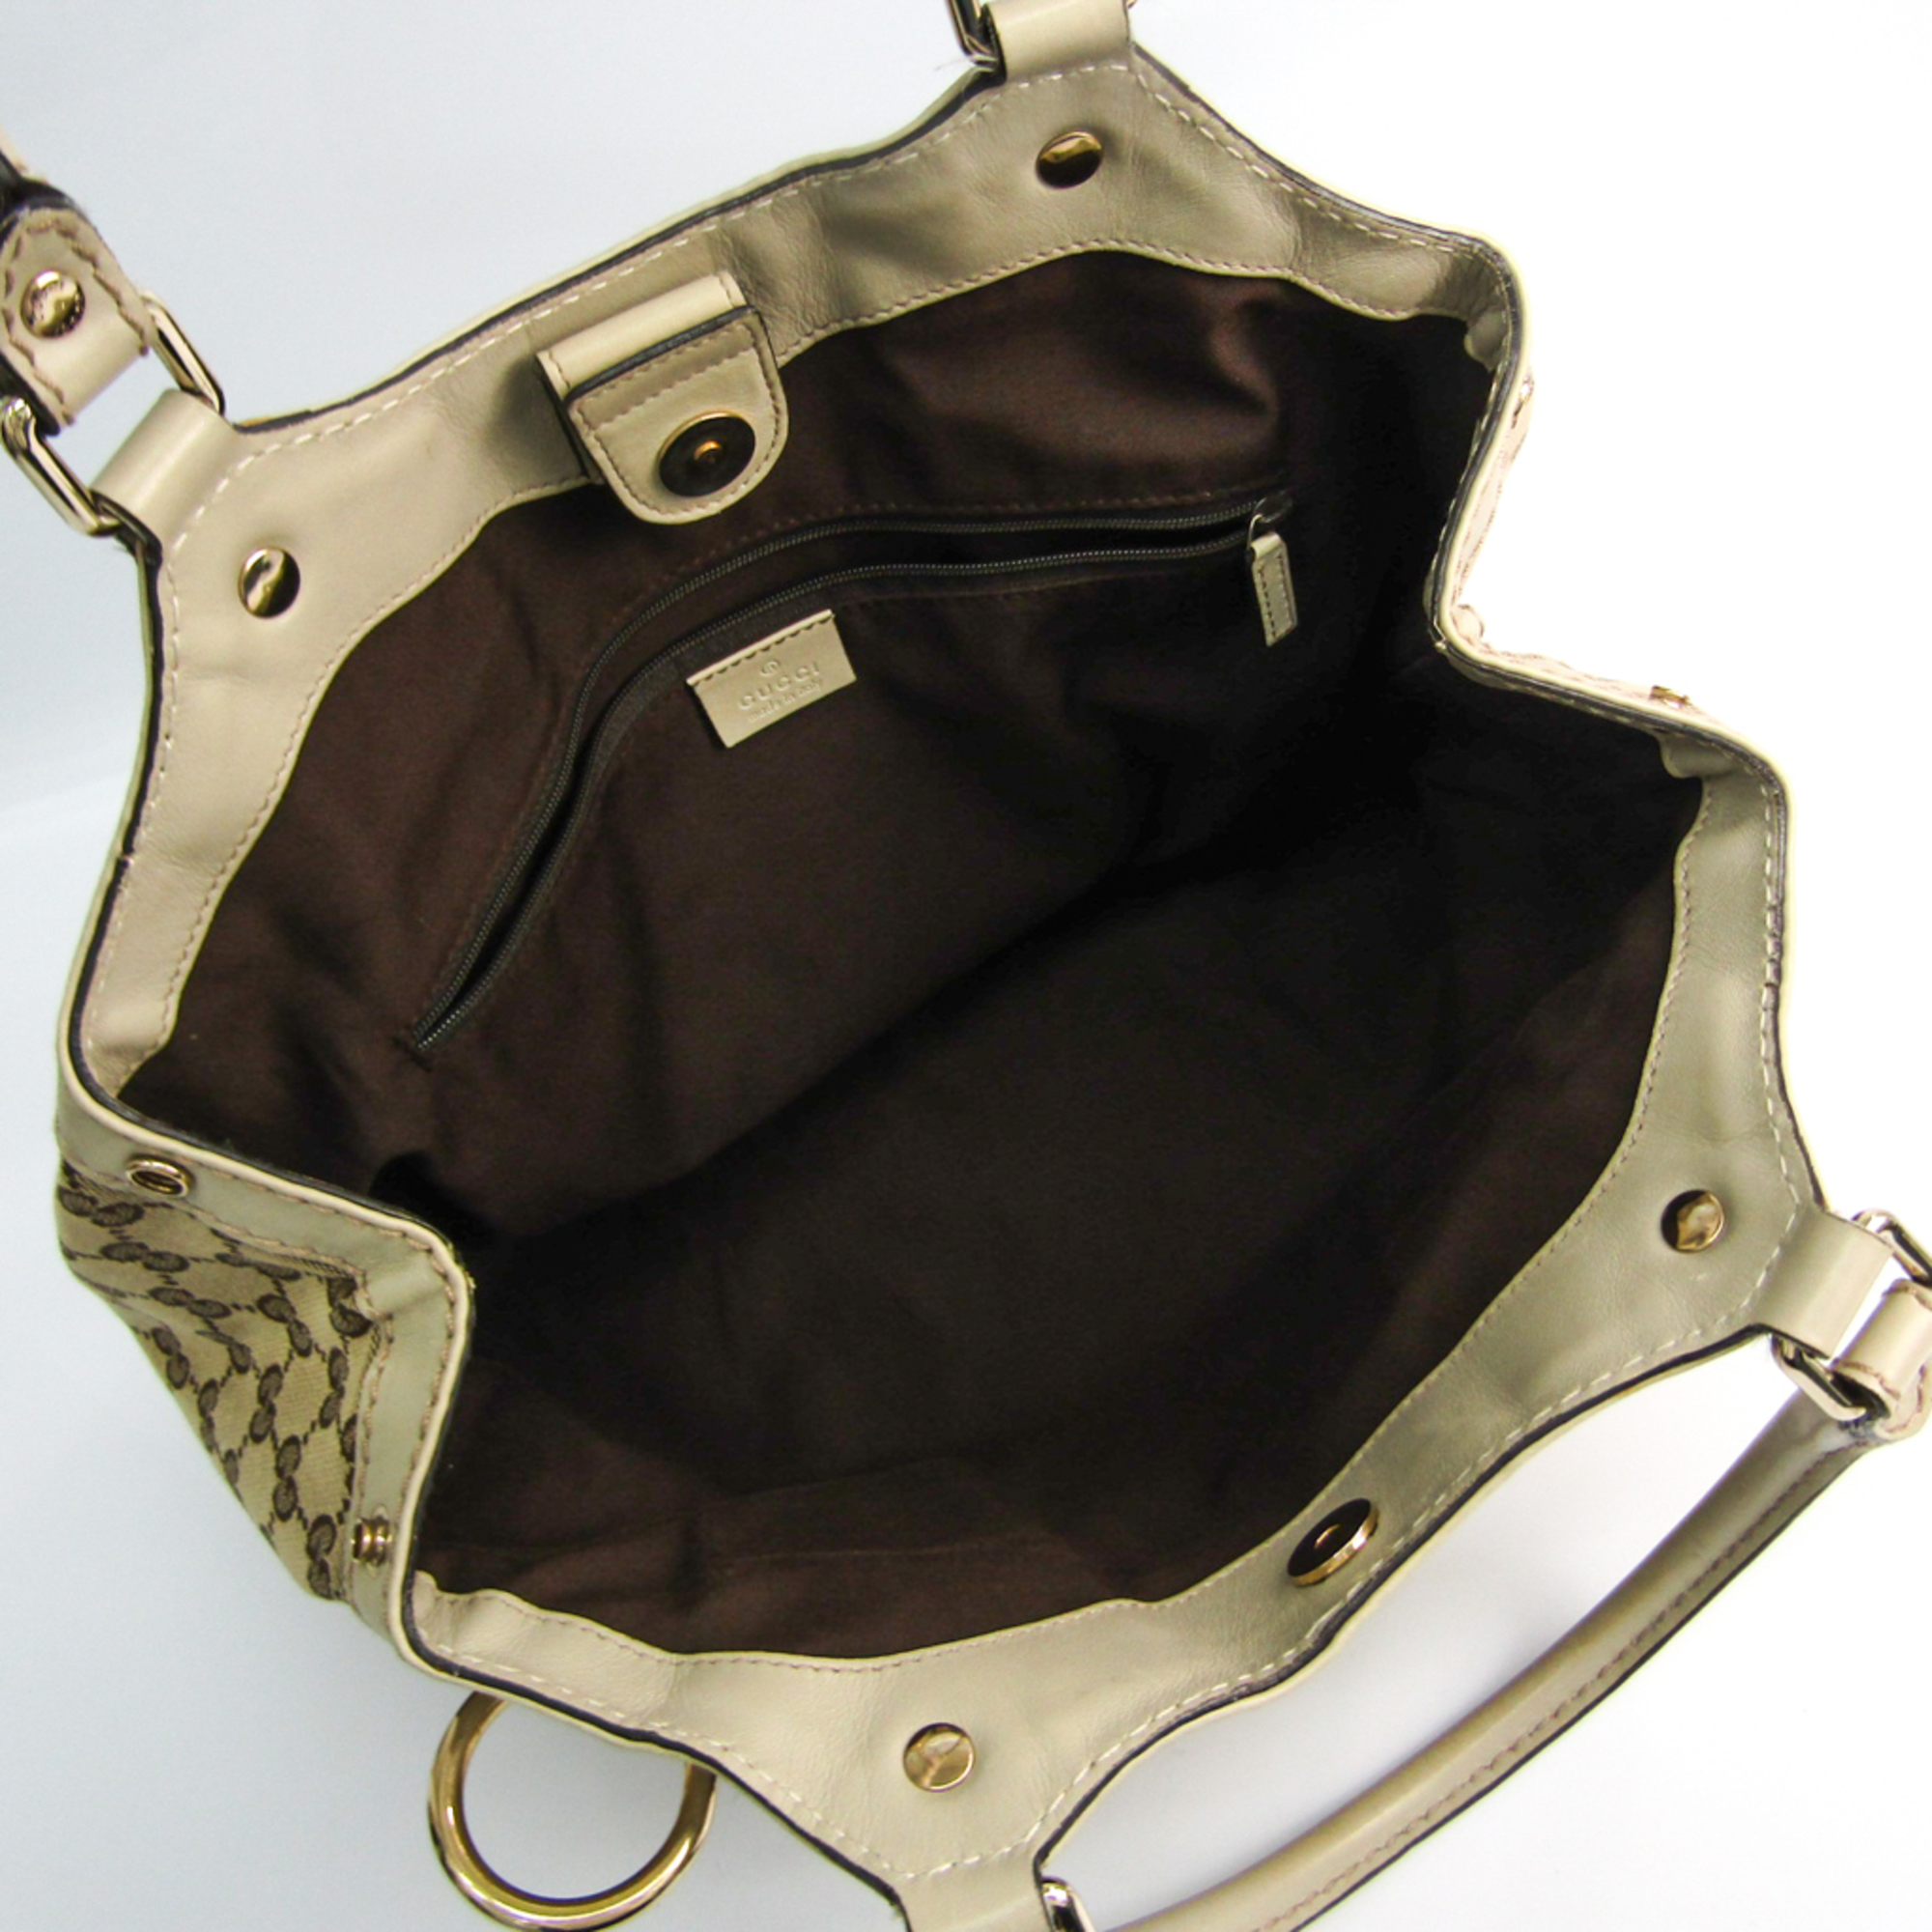 Gucci Sukey 211944 Women's Leather,GG Canvas Handbag Beige,Brown,Gray Beige